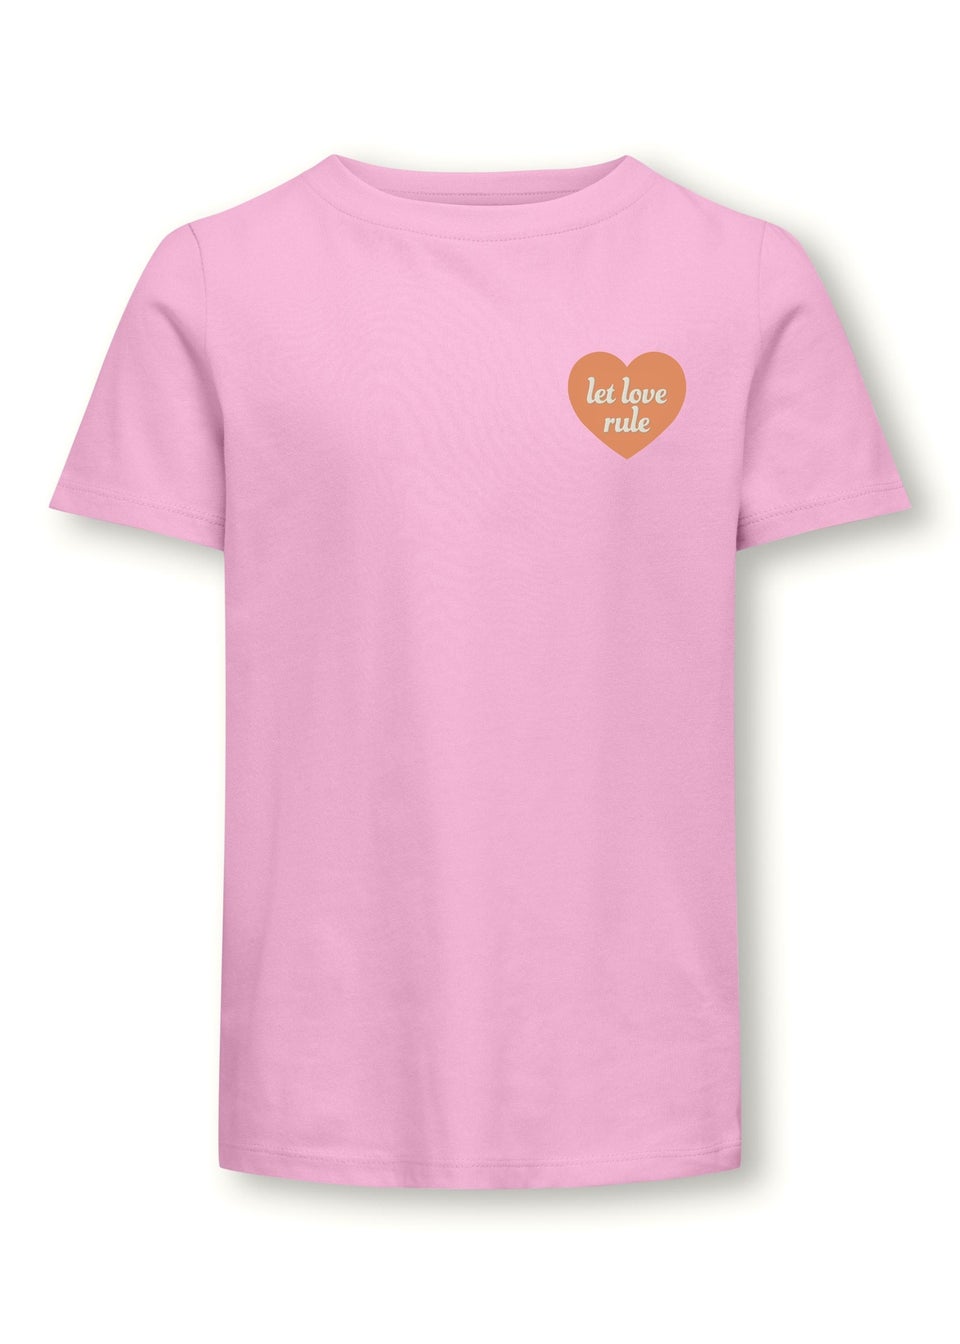 ONLY Girls Pink Love Rule Slogan Heart T-Shirt (5-14yrs)